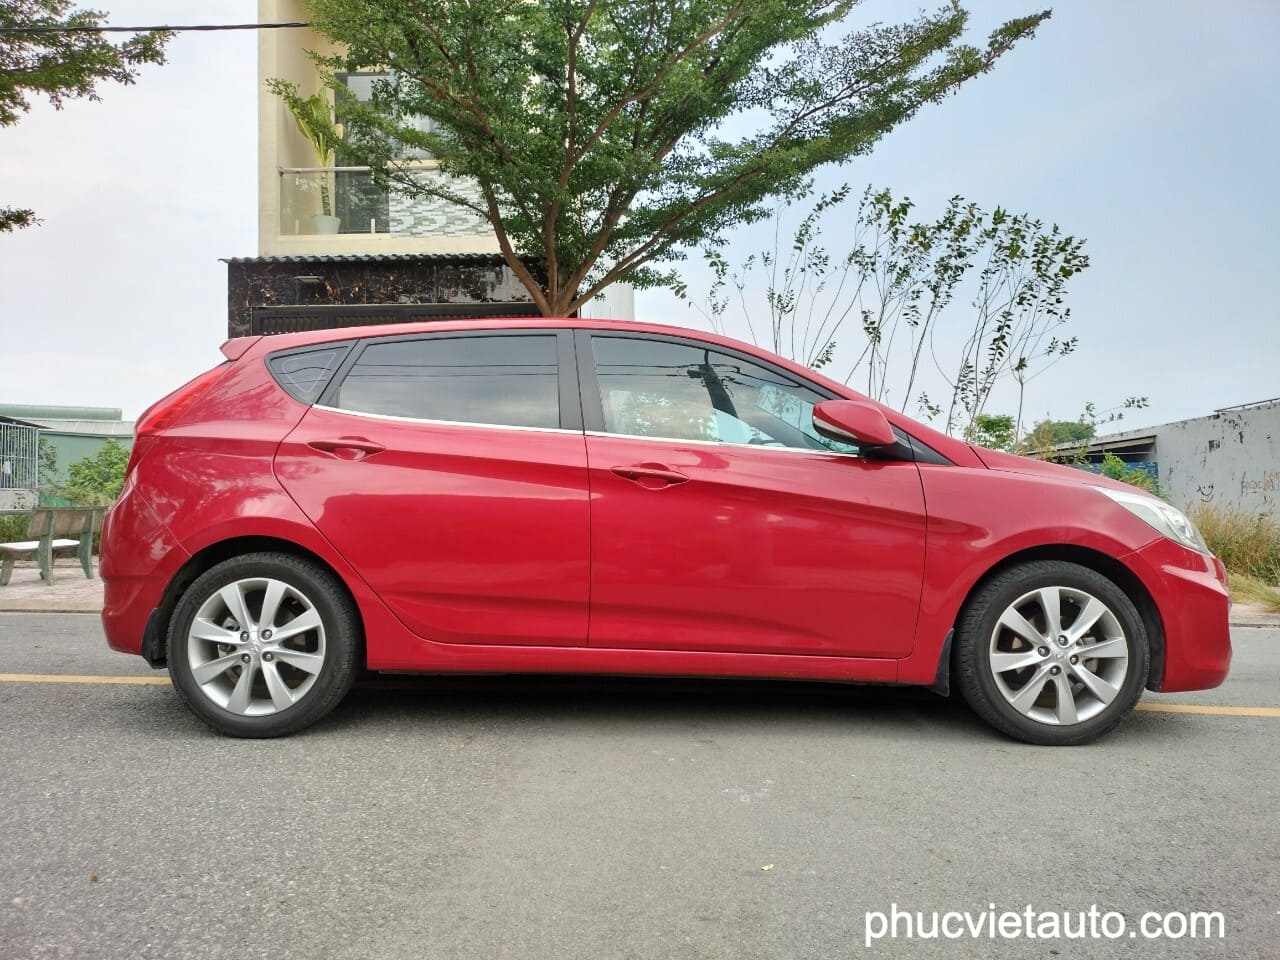 2014 Hyundai Accent Review SR  Drive